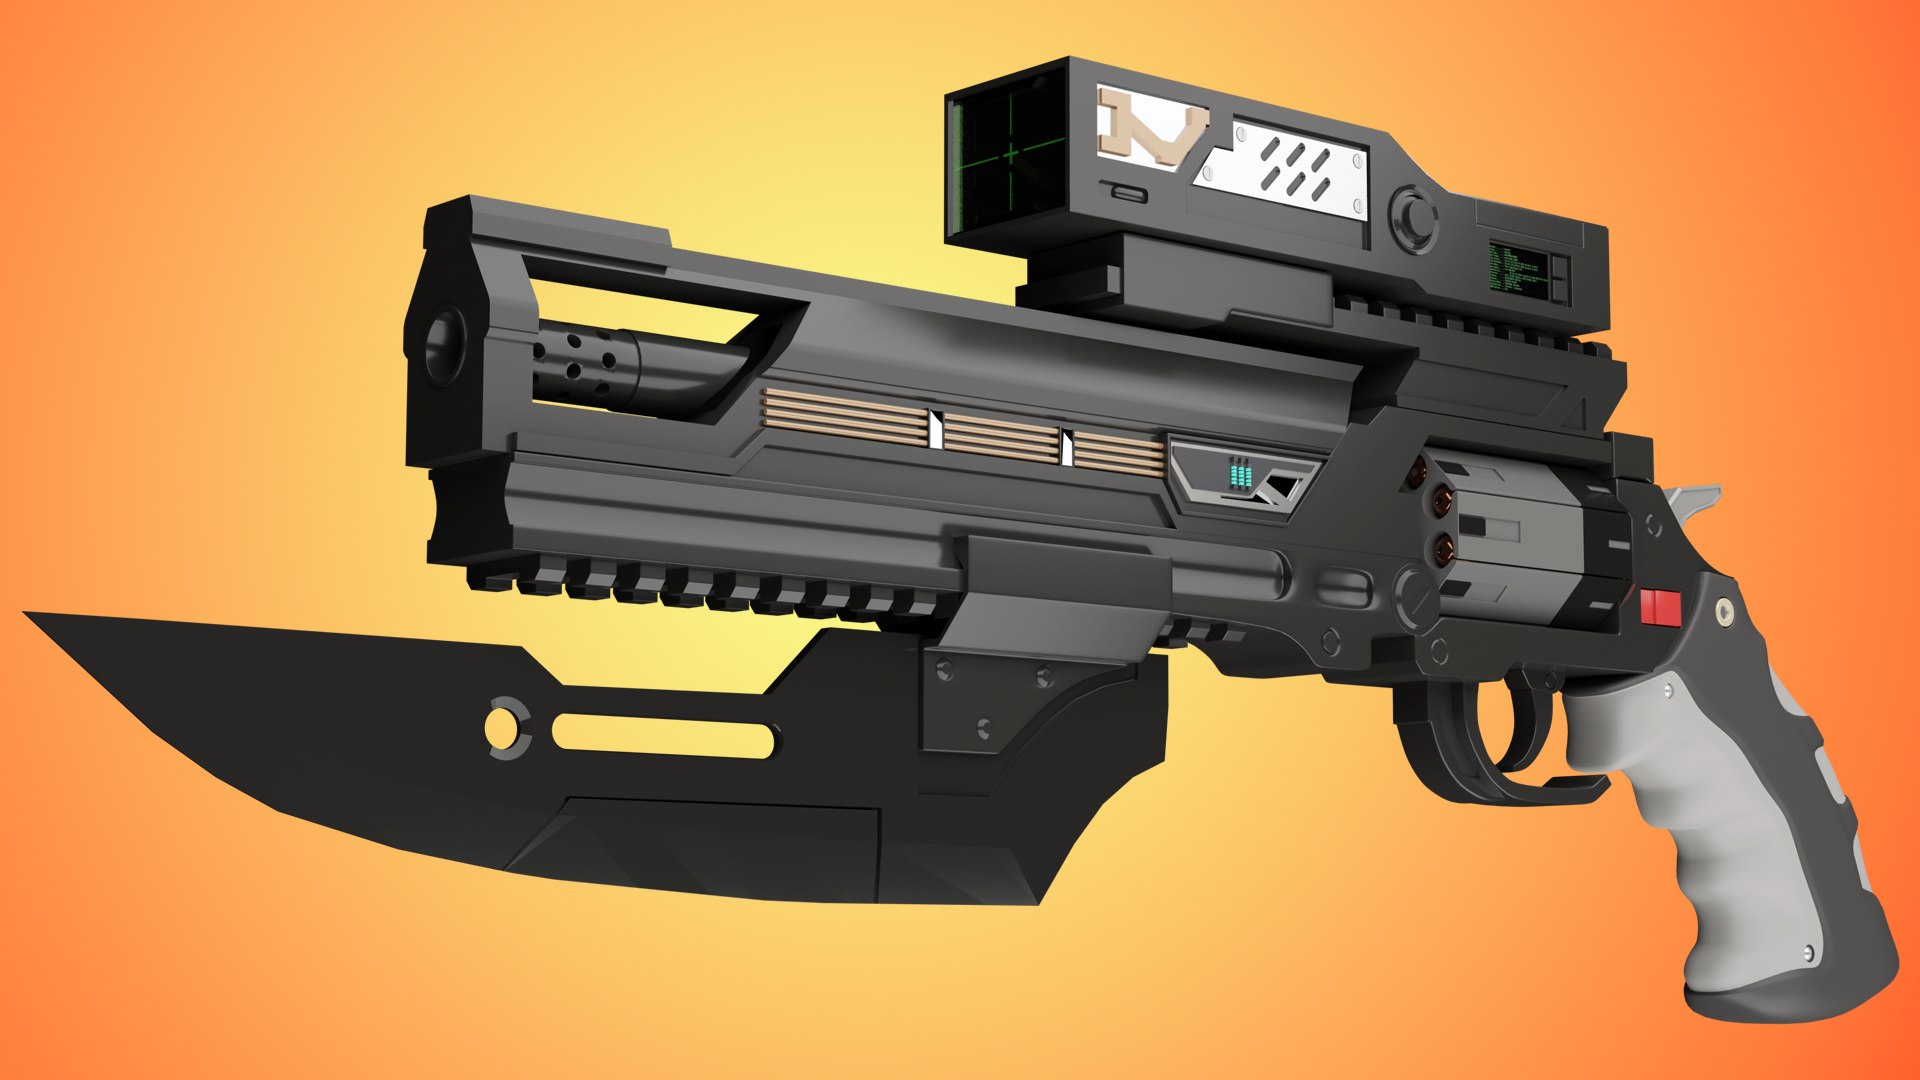 Scifi weapon 3D model TurboSquid 1497499